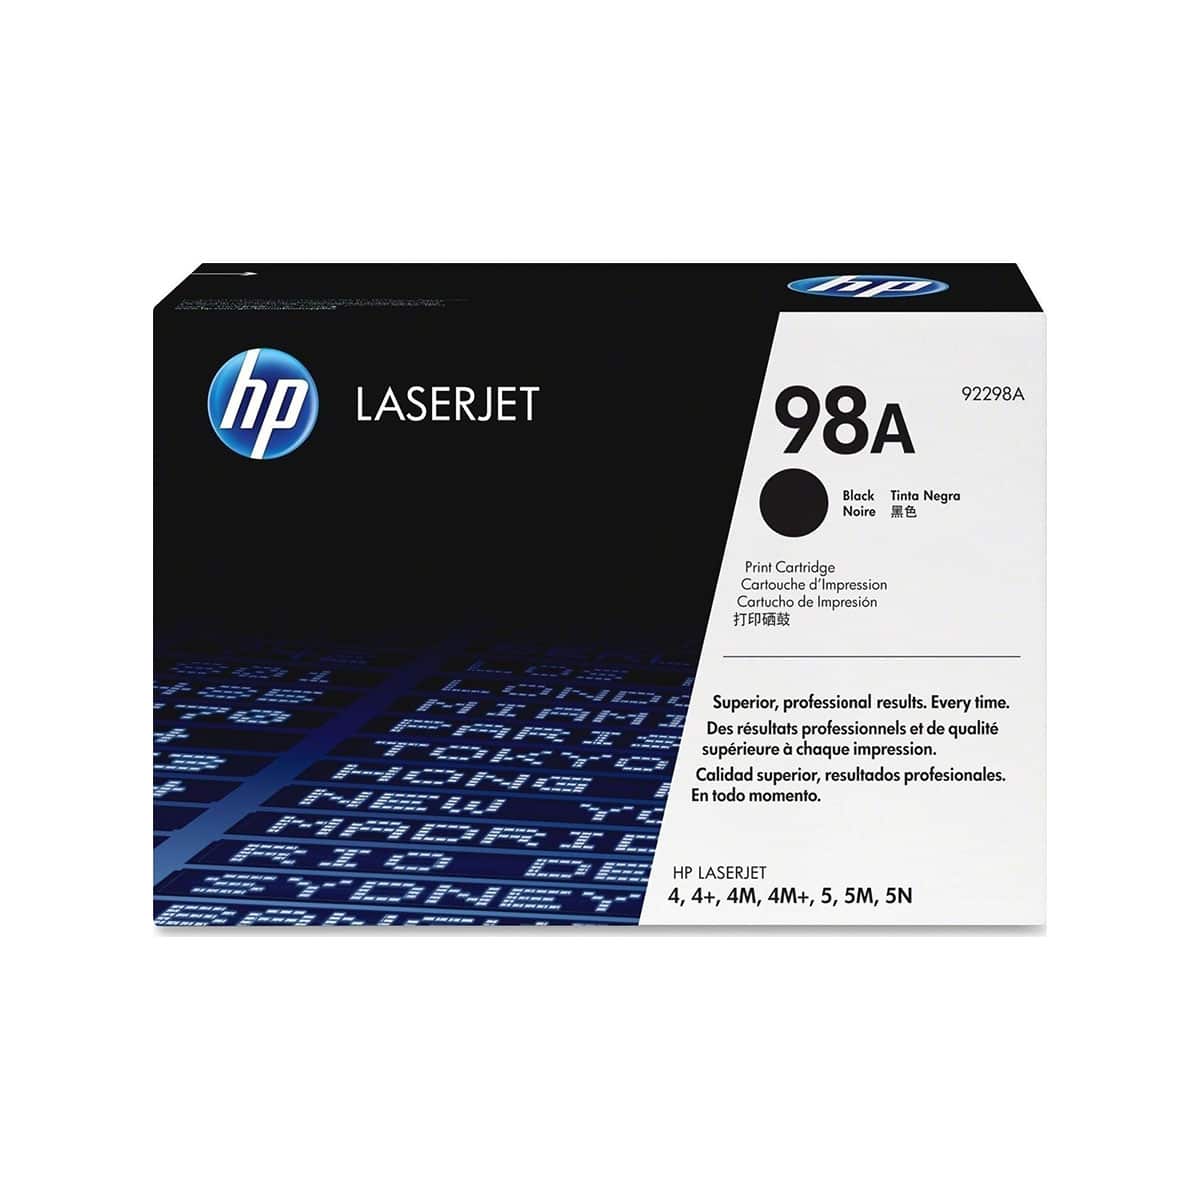 HP 98A Toner Laser Εκτυπωτή Μαύρο 6800 Σελίδων (92298A)